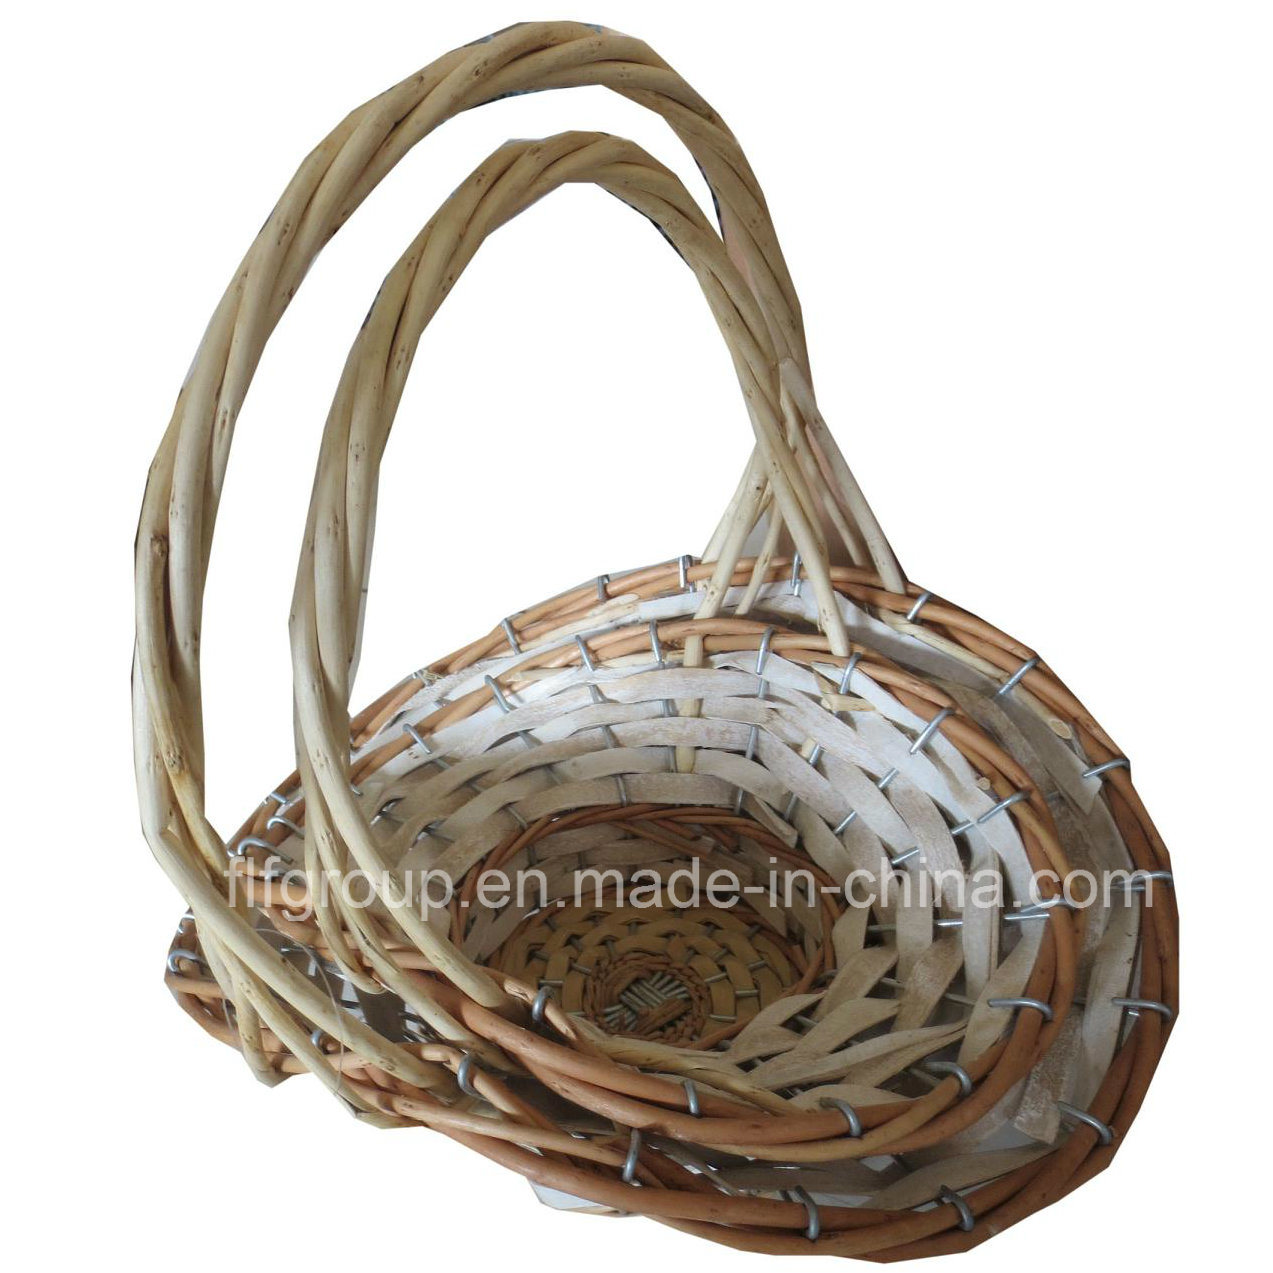 Handmade Beautiful Willow Flower Basket